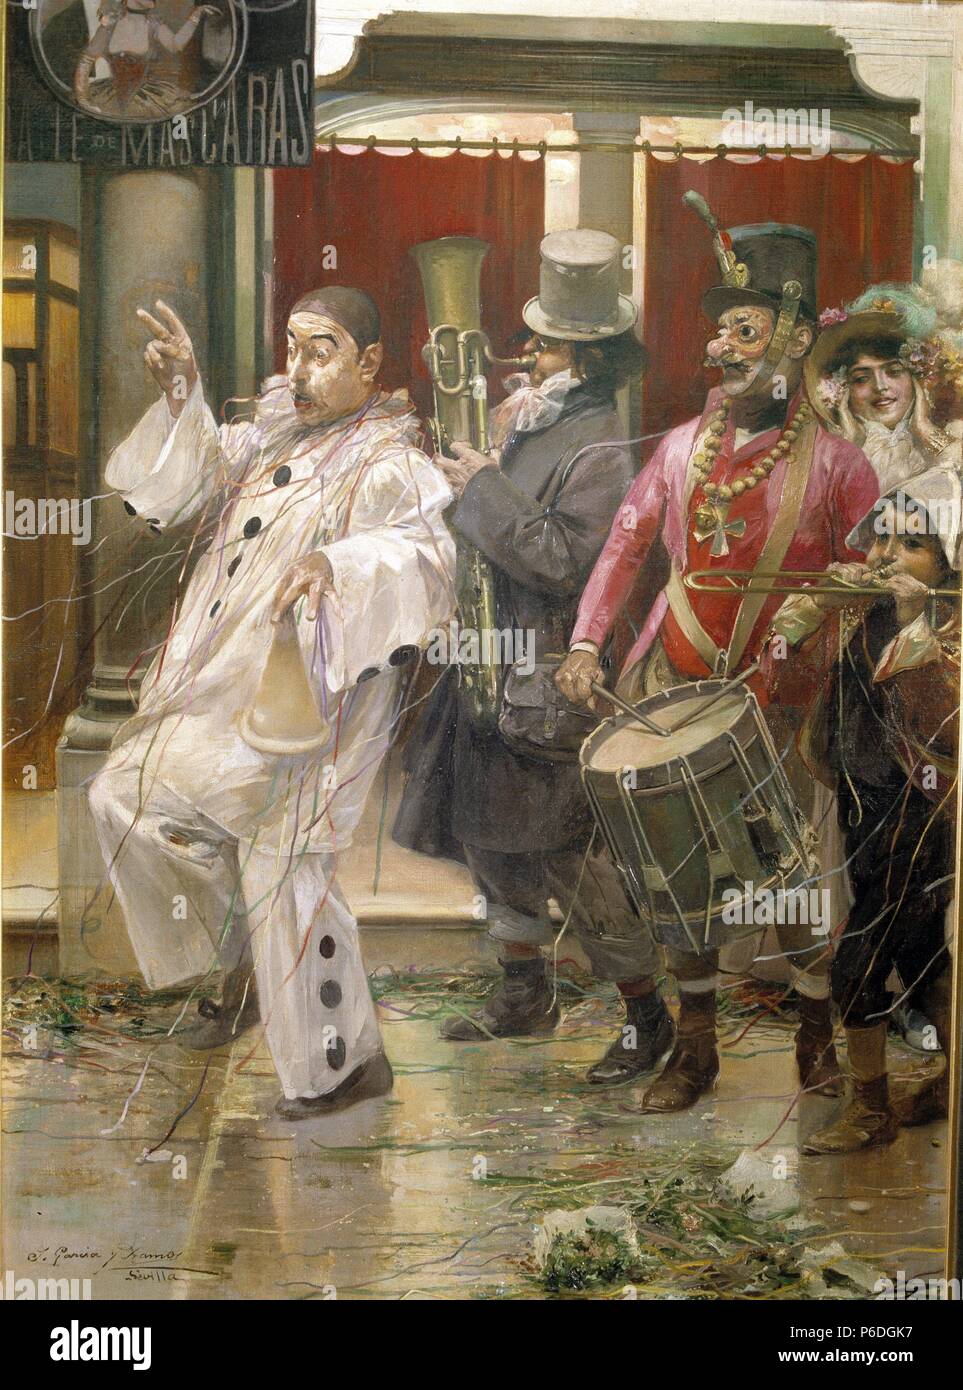 JOSE GARCIA RAMOS. PINTOR SPAÑOL 1852-1912. ' CARNAVAL EN SEVILLA ' OLEO. COLECCION PARTICULAR. Stock Photo